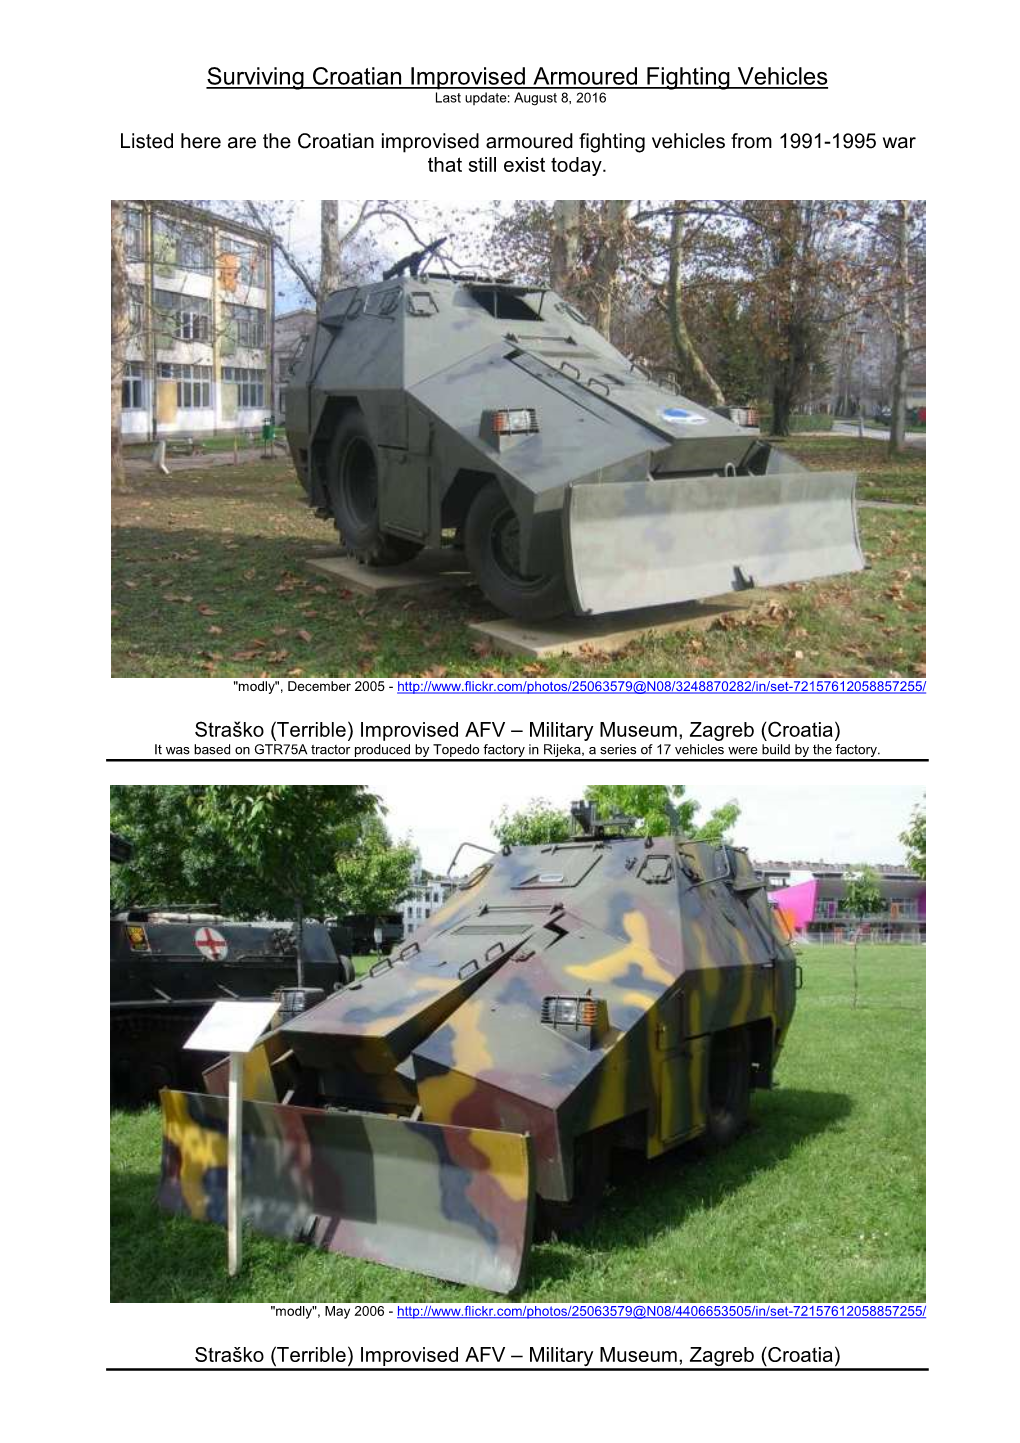 Surviving Croatian Improvised Armoured Fighting Vehicles Last Update: August 8, 2016